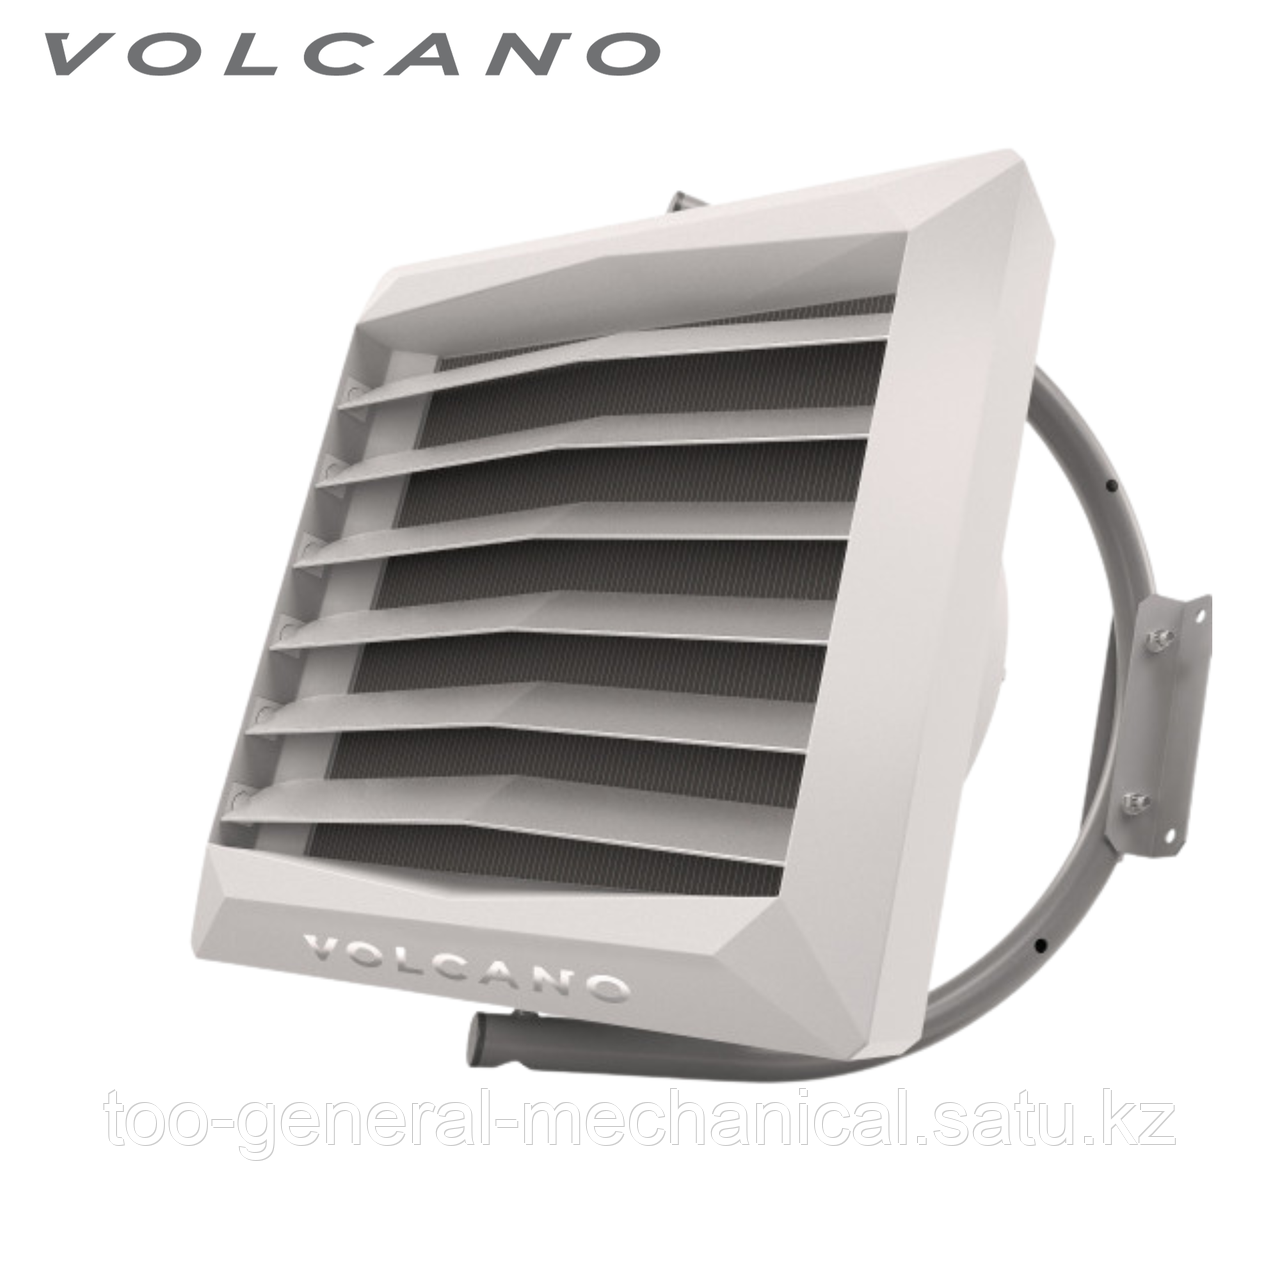 Тепловентилятор Volcano MINI VR EC. Воздушно-отопительный агрегат VOLCANO MINI EC.